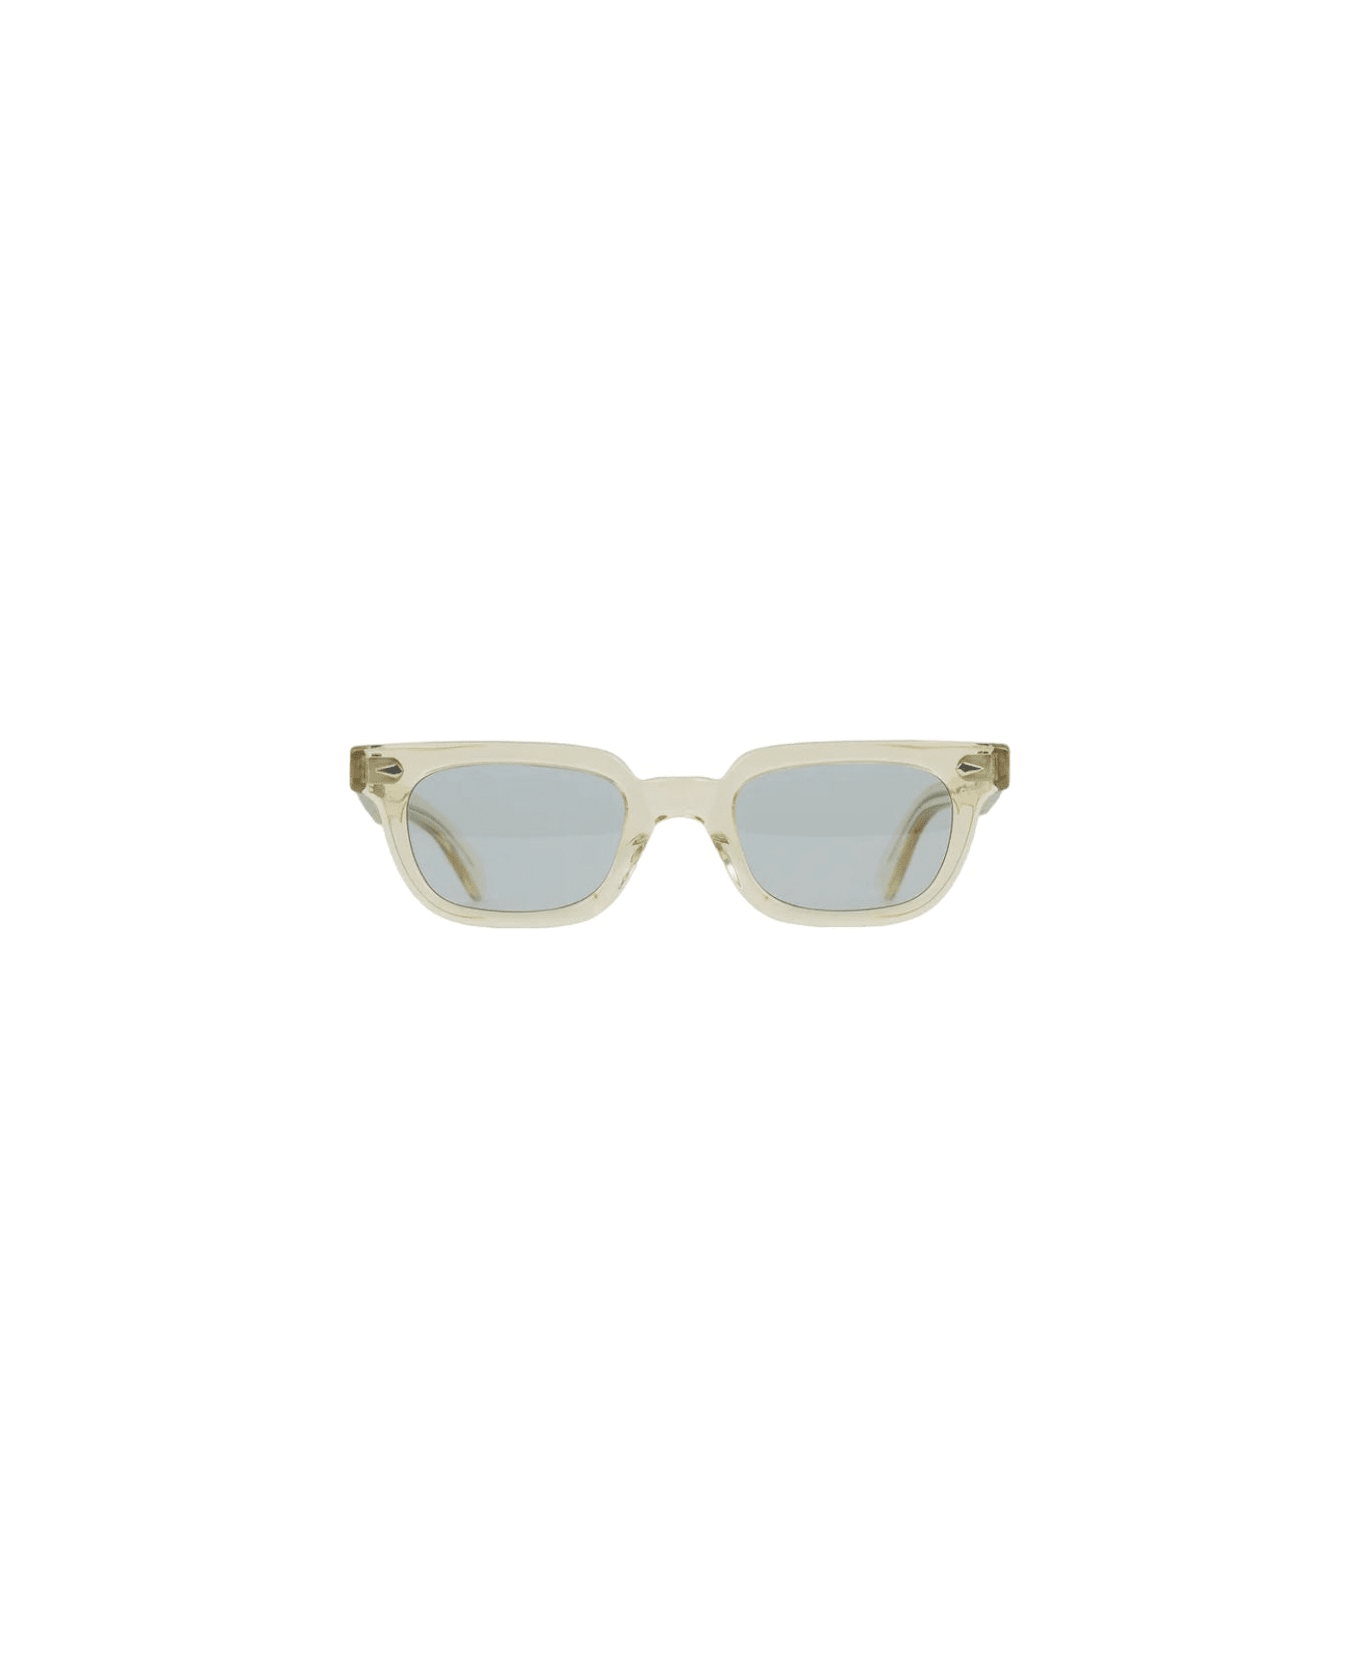 Julius Tart Optical T-man - Champagne Sunglasses サングラス